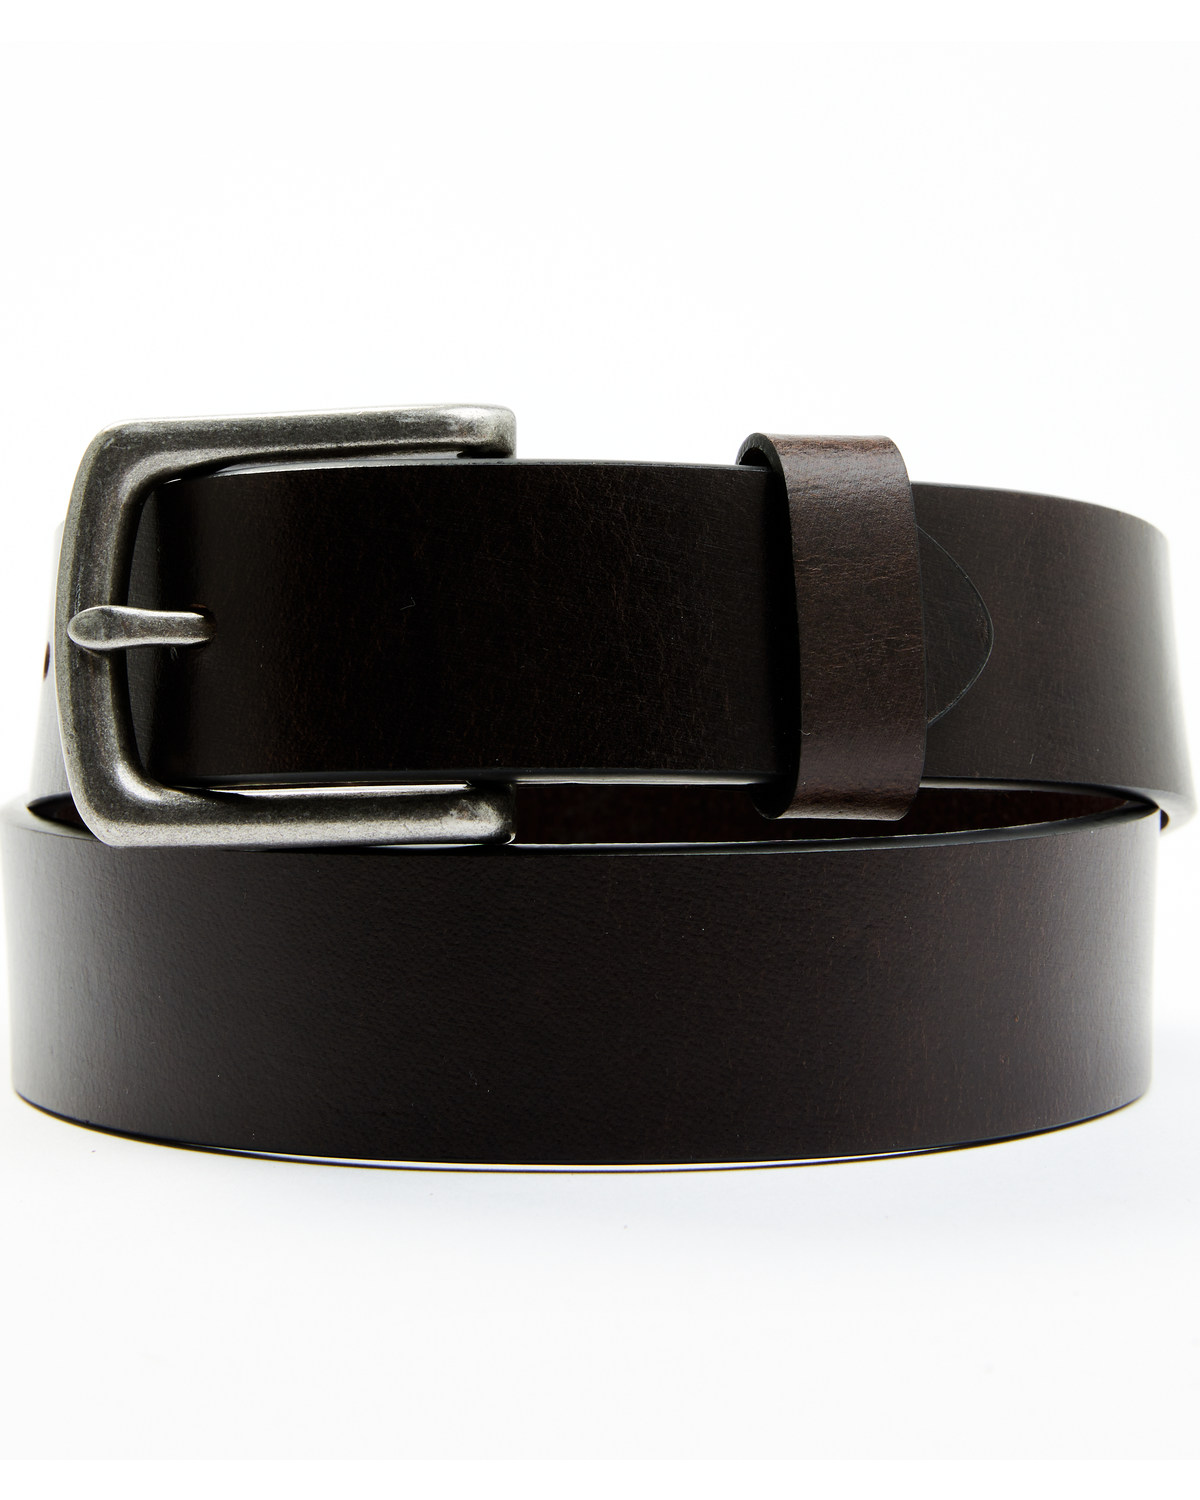 Hawx Men's Dark Brown Beveled Edge Leather Belt